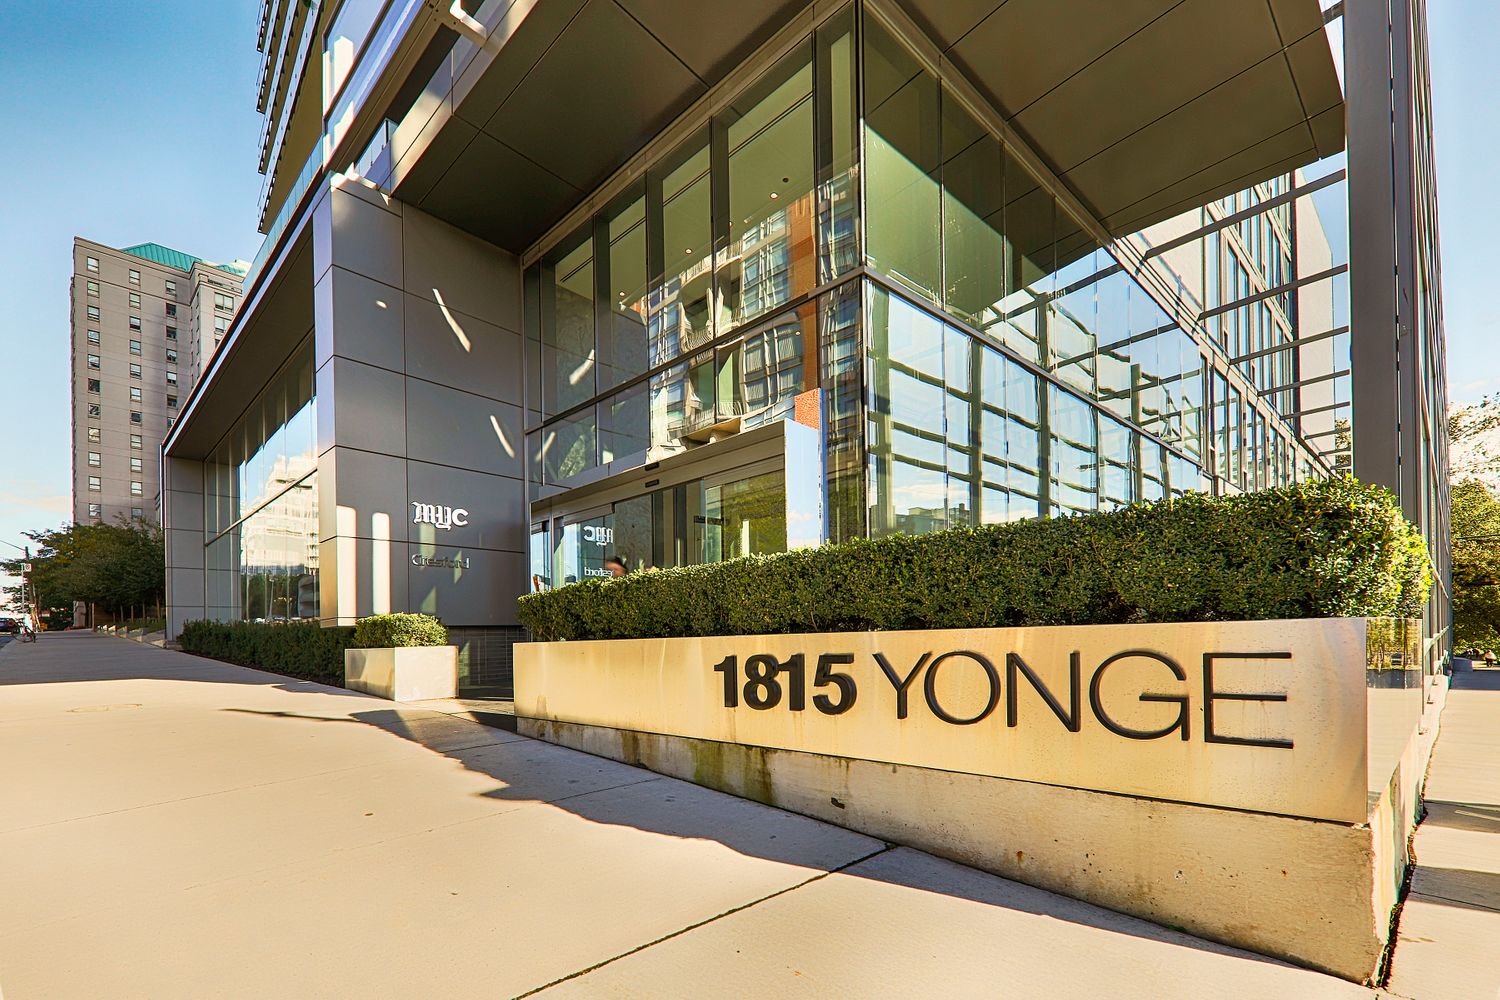 1815 Yonge Street. MYC is located in  Midtown, Toronto - image #4 of 4